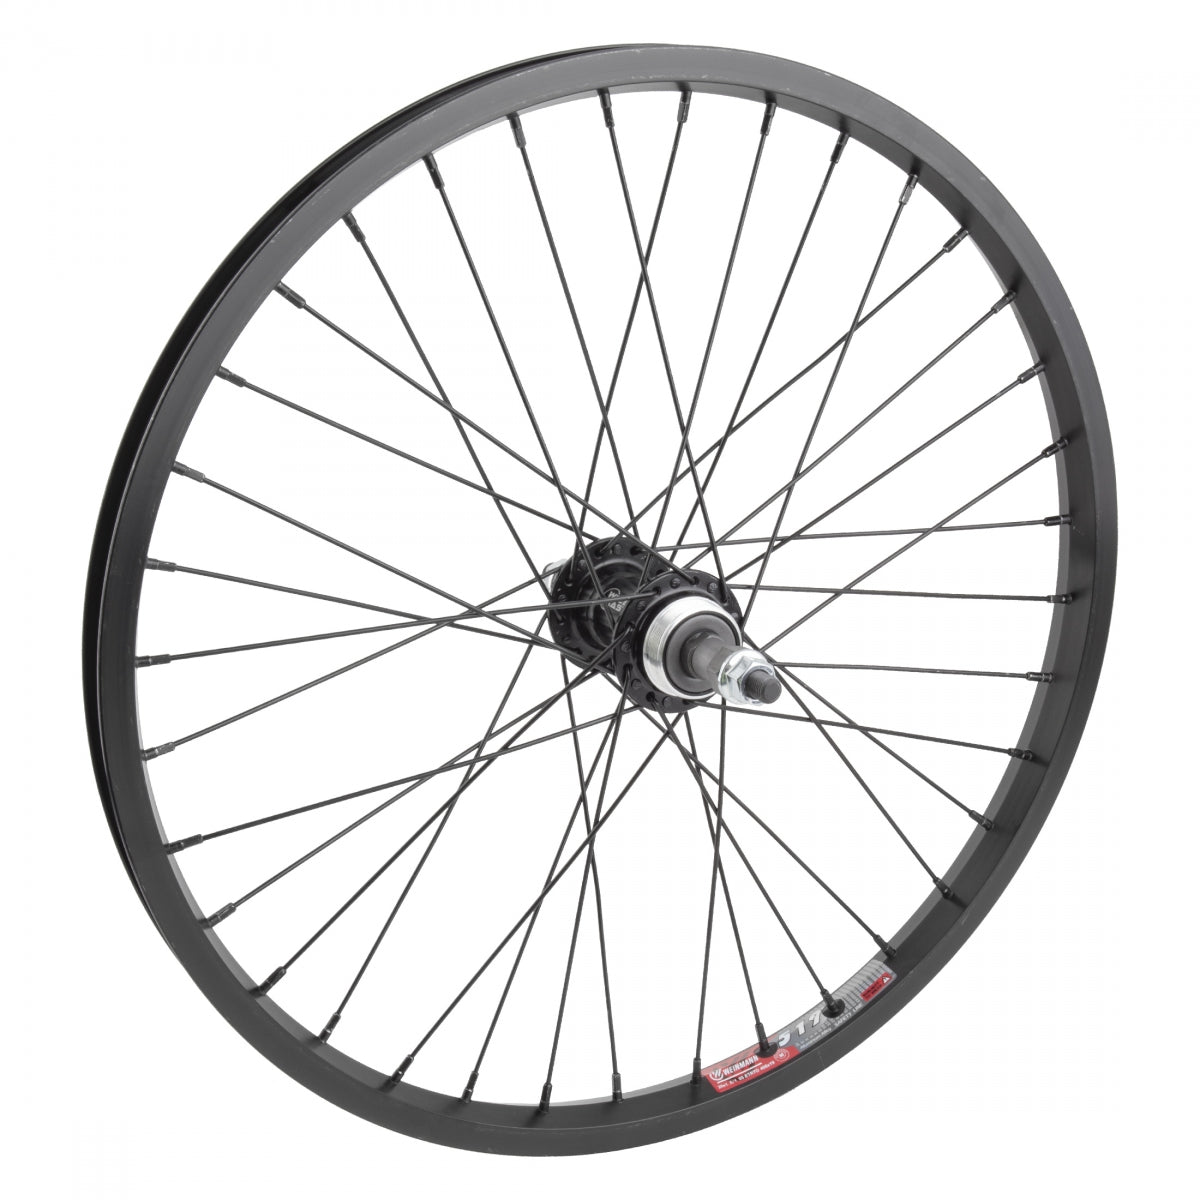 Wheel Master Rear Bicycle Wheel 20 x 1.75 36H, Alloy, Bolt On, Black, 5/6/7 Speed